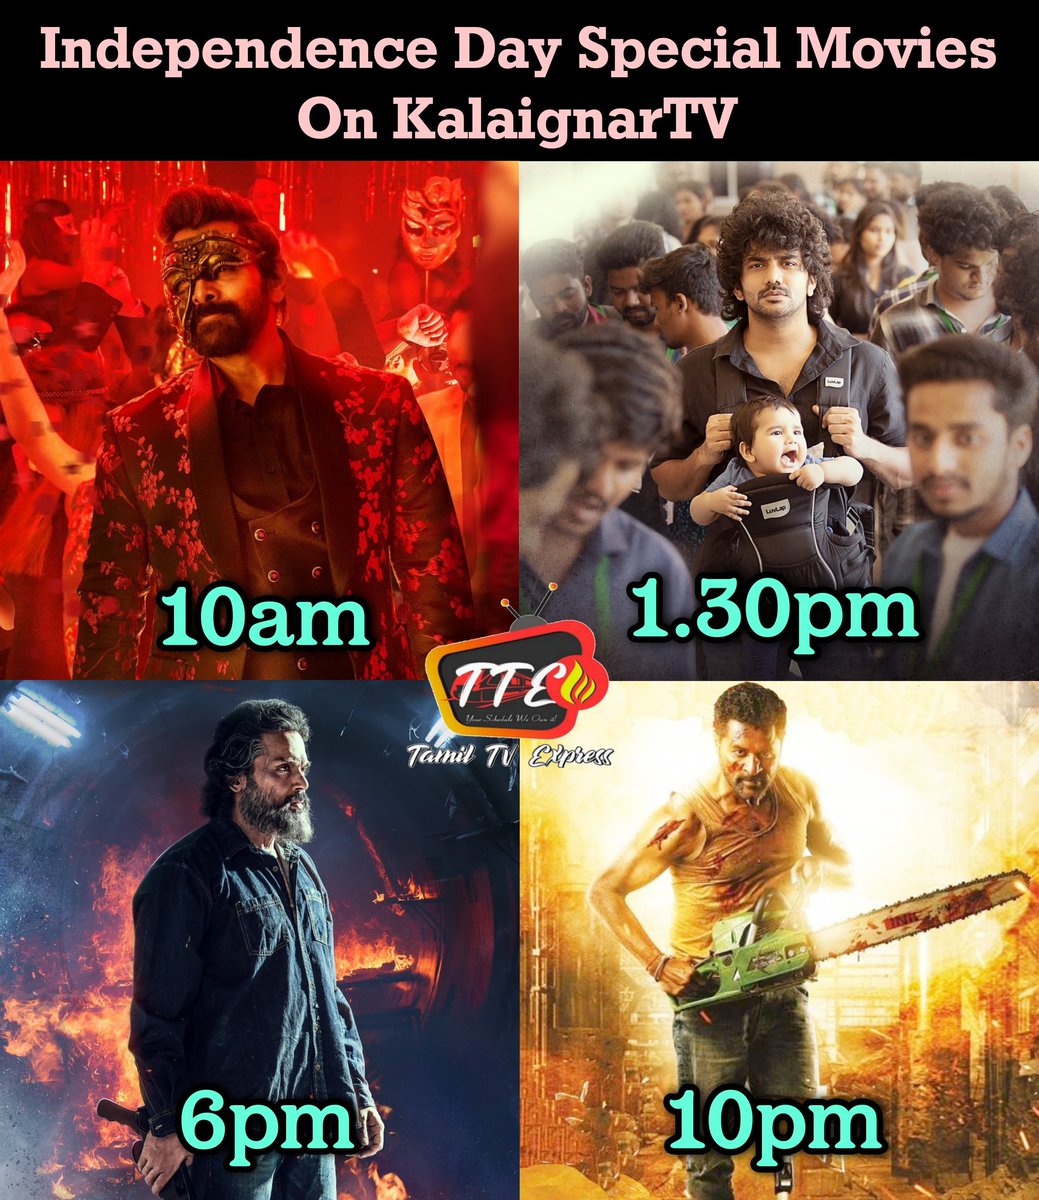 #IndependenceDay Special Movies On #KalaignarTV 

Tomorrow at 
10am:- #Cobra
1.30pm:- #Dada 
6pm:- #Sardar 
10pm:- #PoikkalKuthirai 

#Vikram #Kavin #Karthi #Prabhudeva